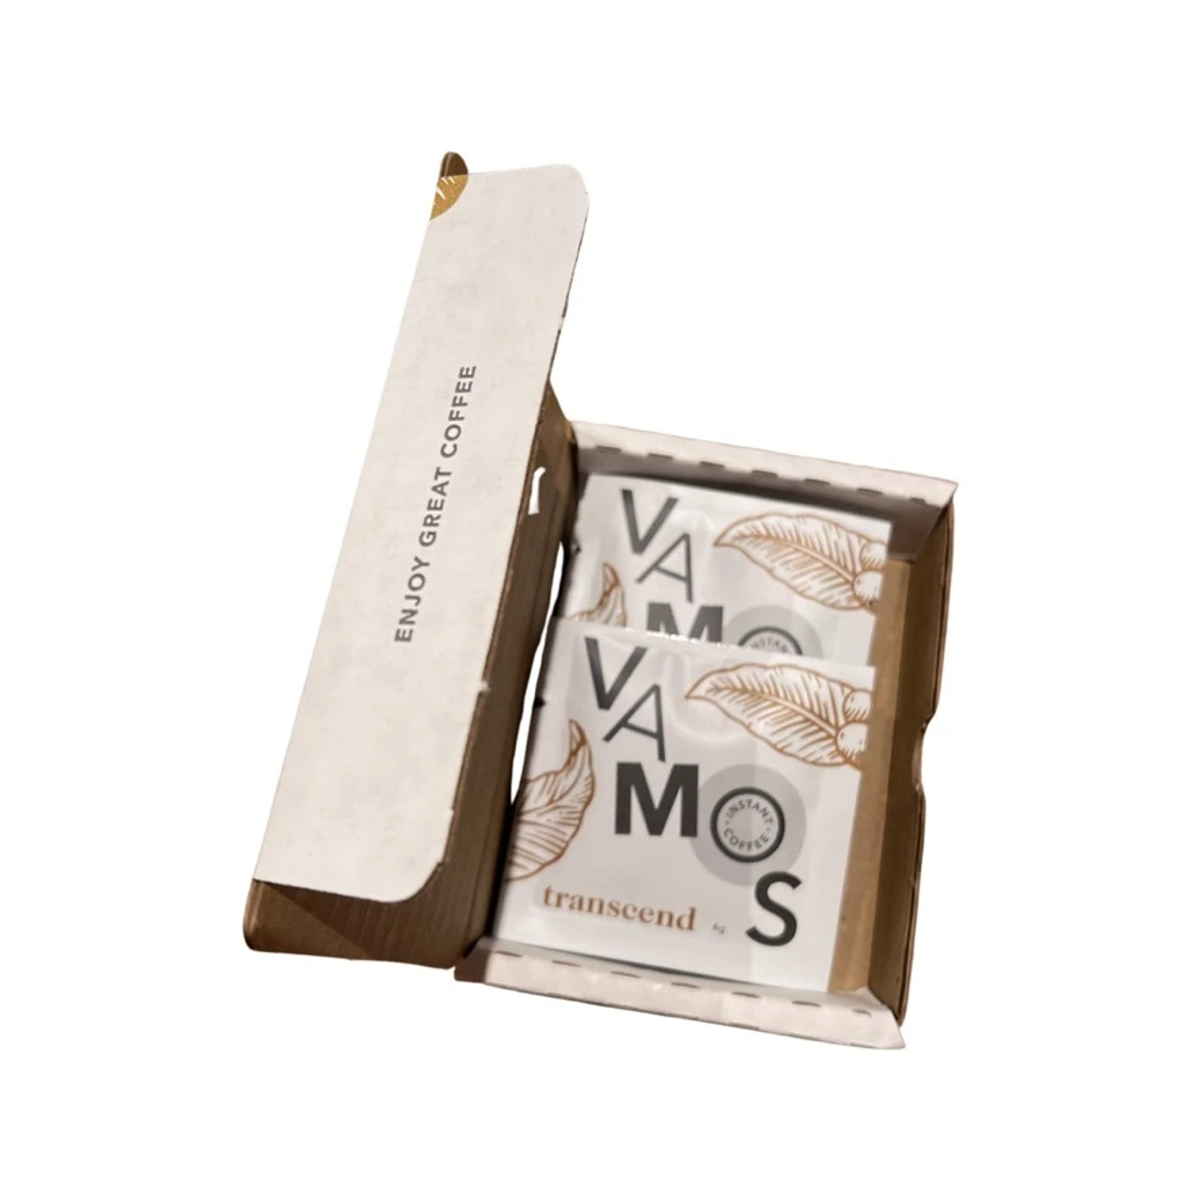 Transcend - Vamos Instant Coffee - Box of 5